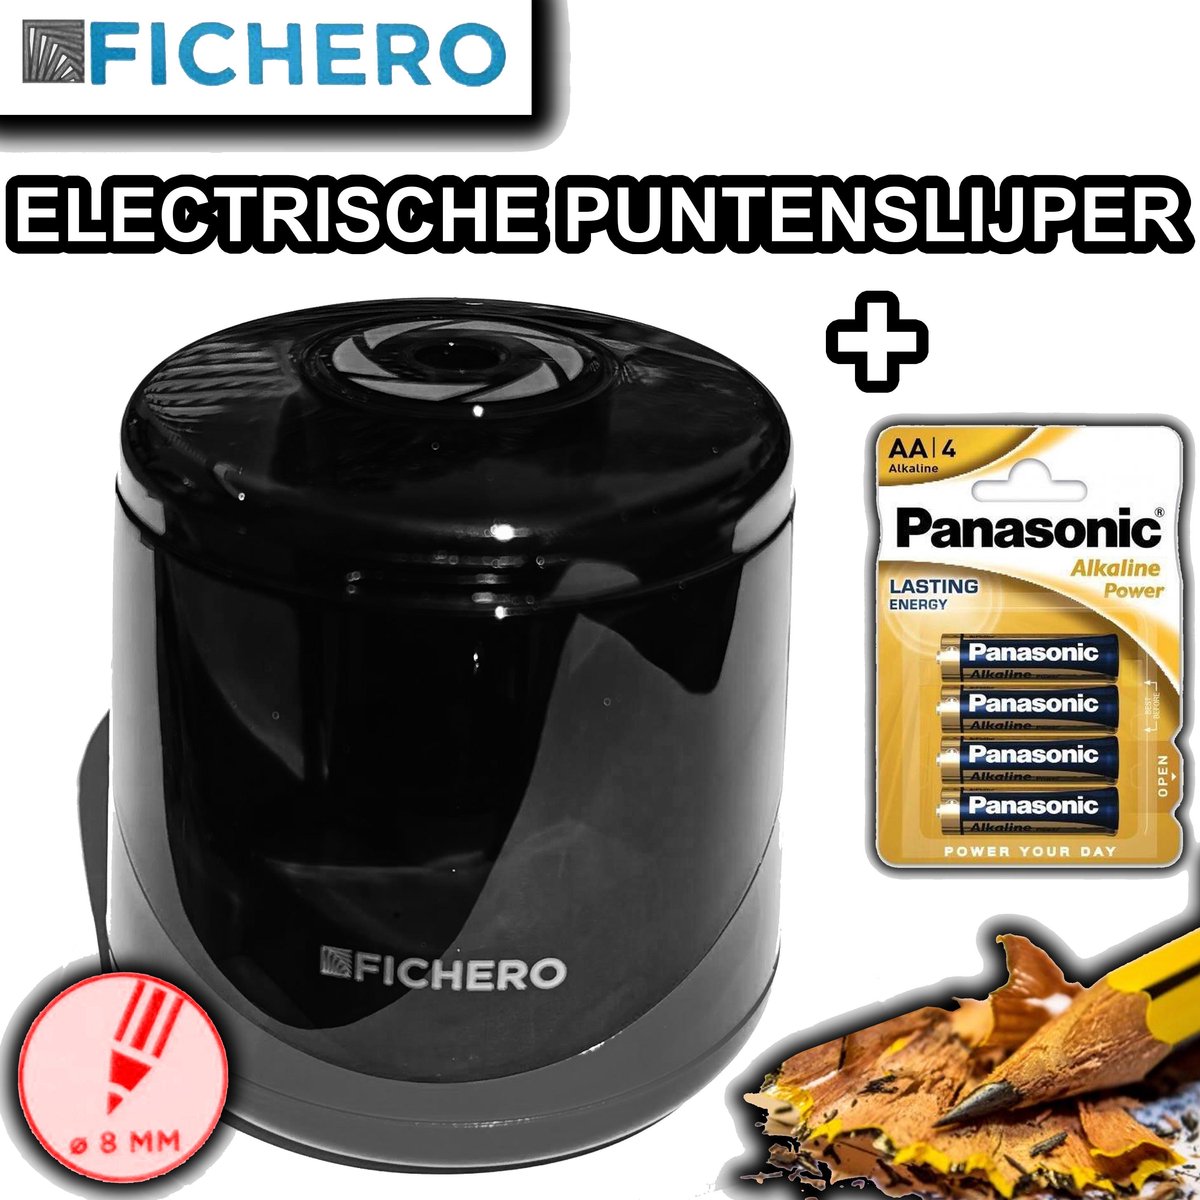 FICHERO ZWARTE INCLUSIEF 4 Alkaline Batterijen |... | bol.com